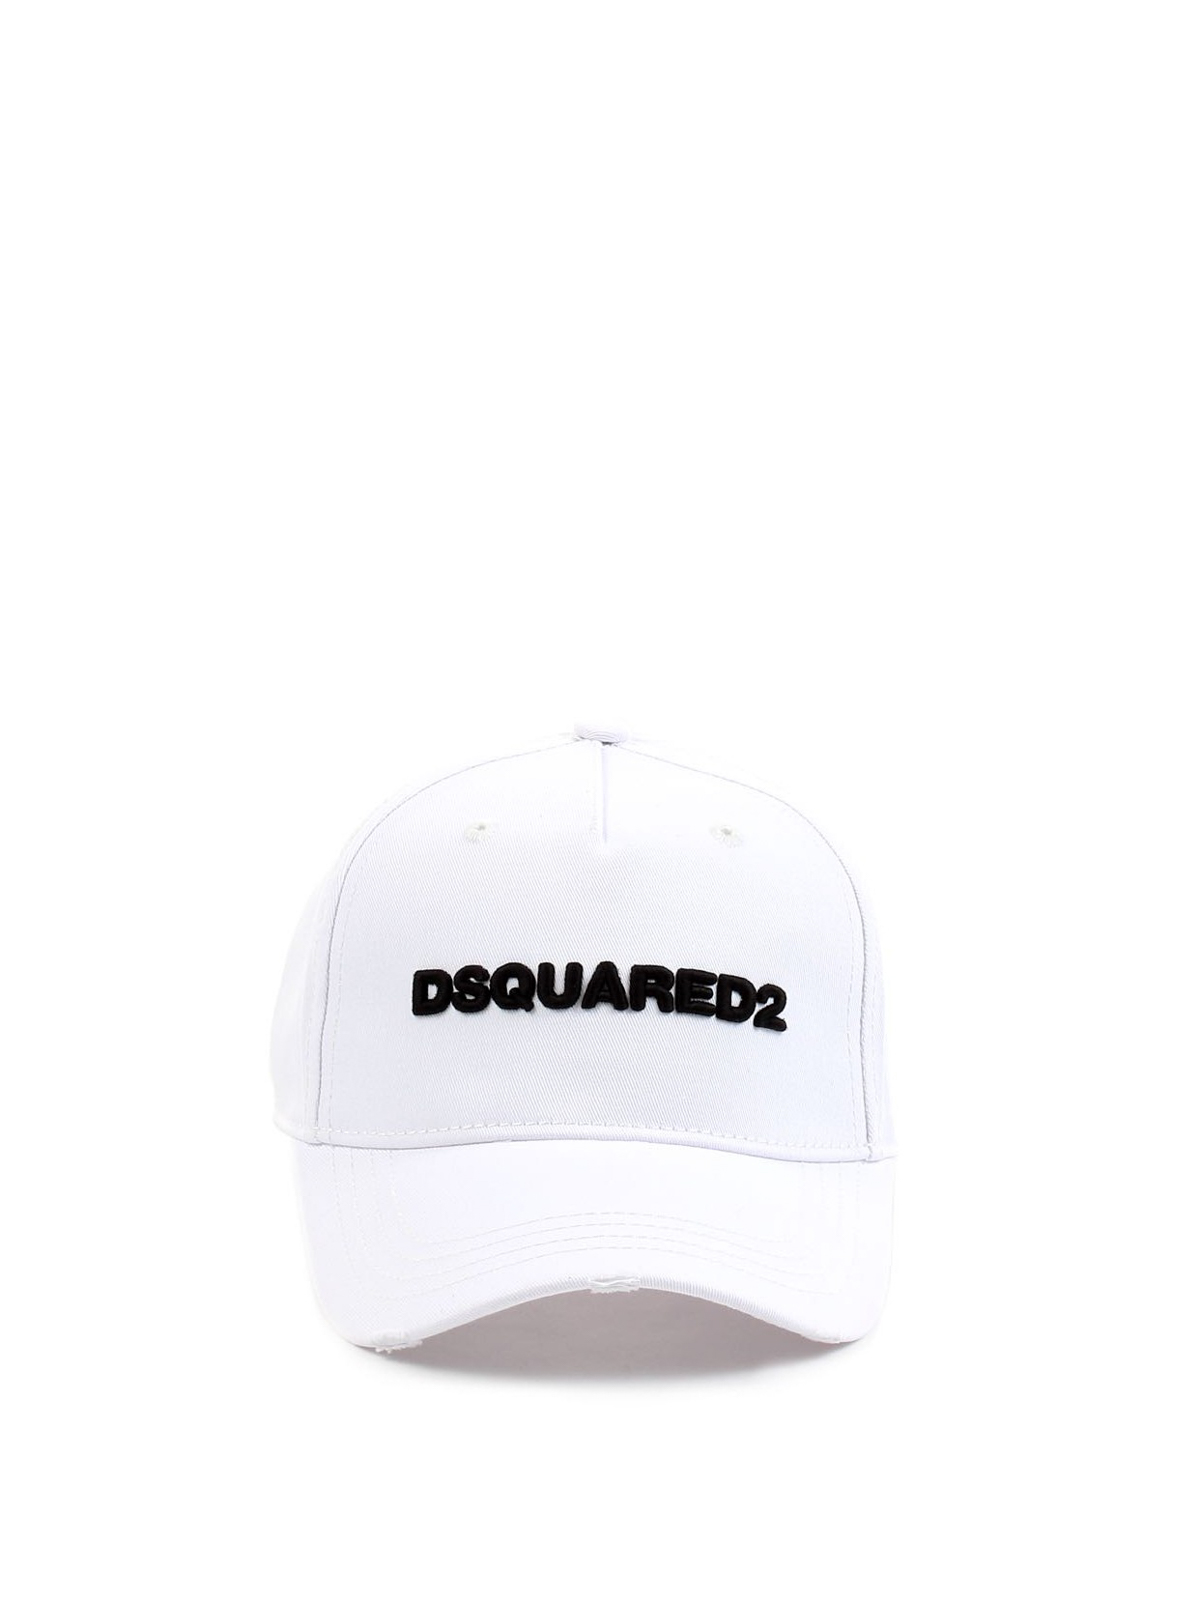 dsquared hat white